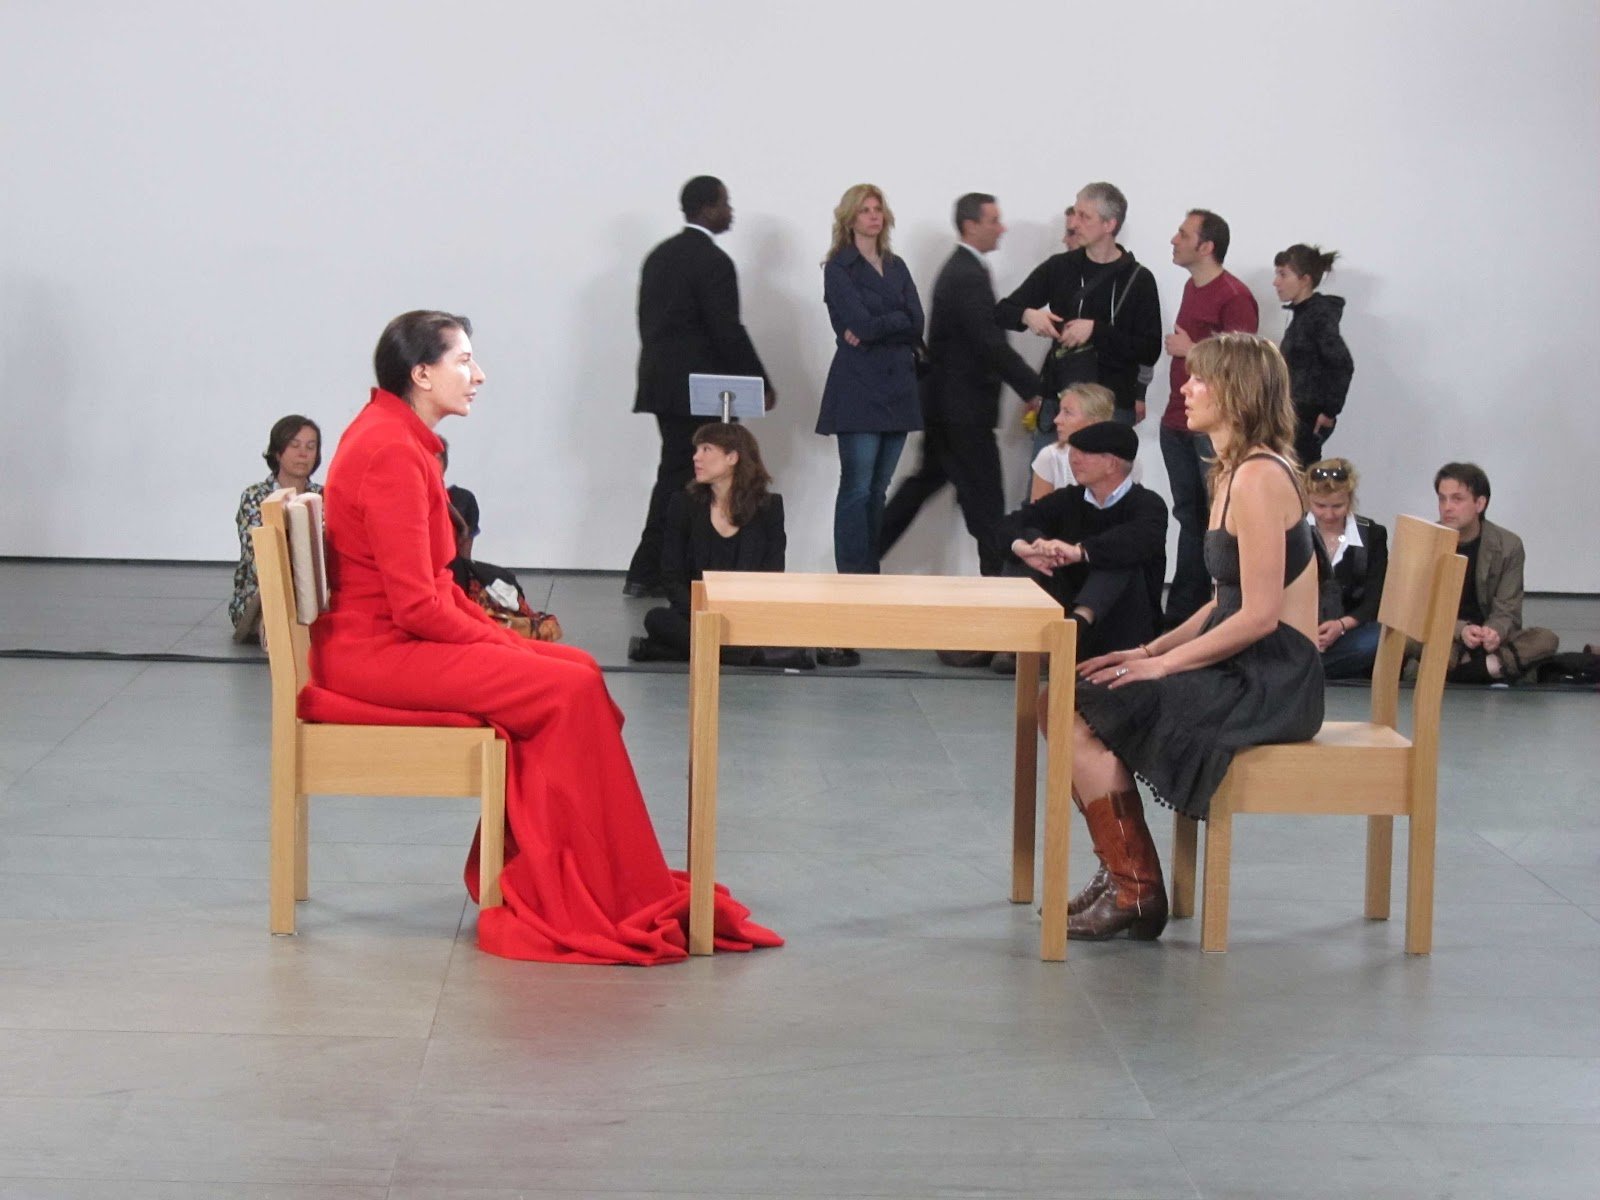 Marina Abramović, The Artist is Present, 2010, The Museum of Modern Art, New York